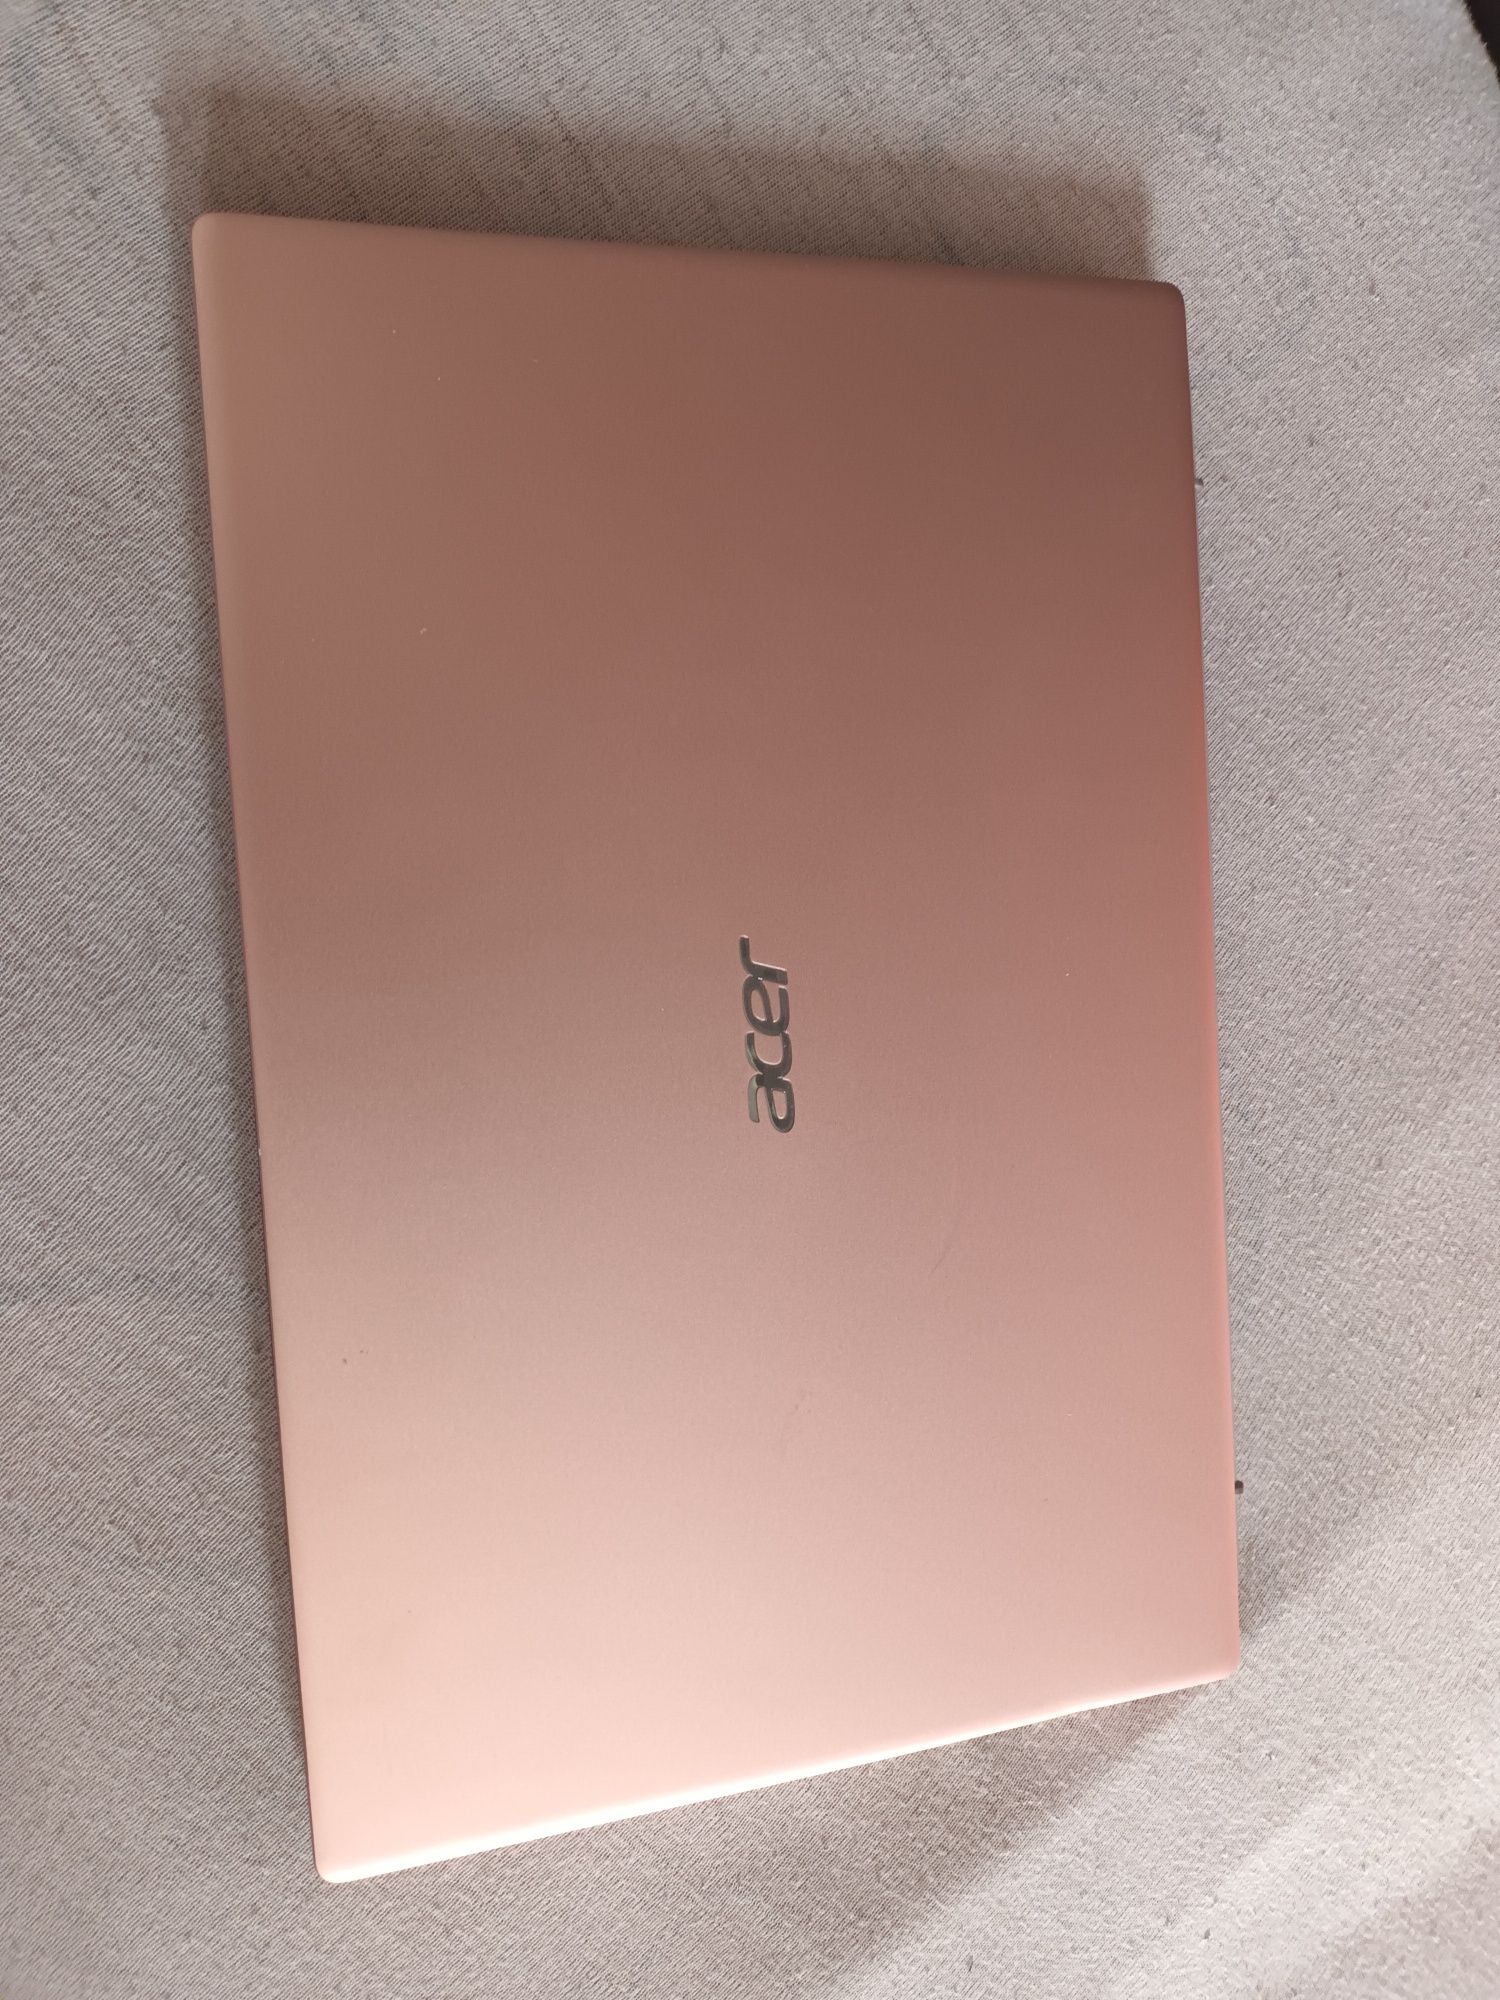 Laptop ultrabook Acer Swift 1